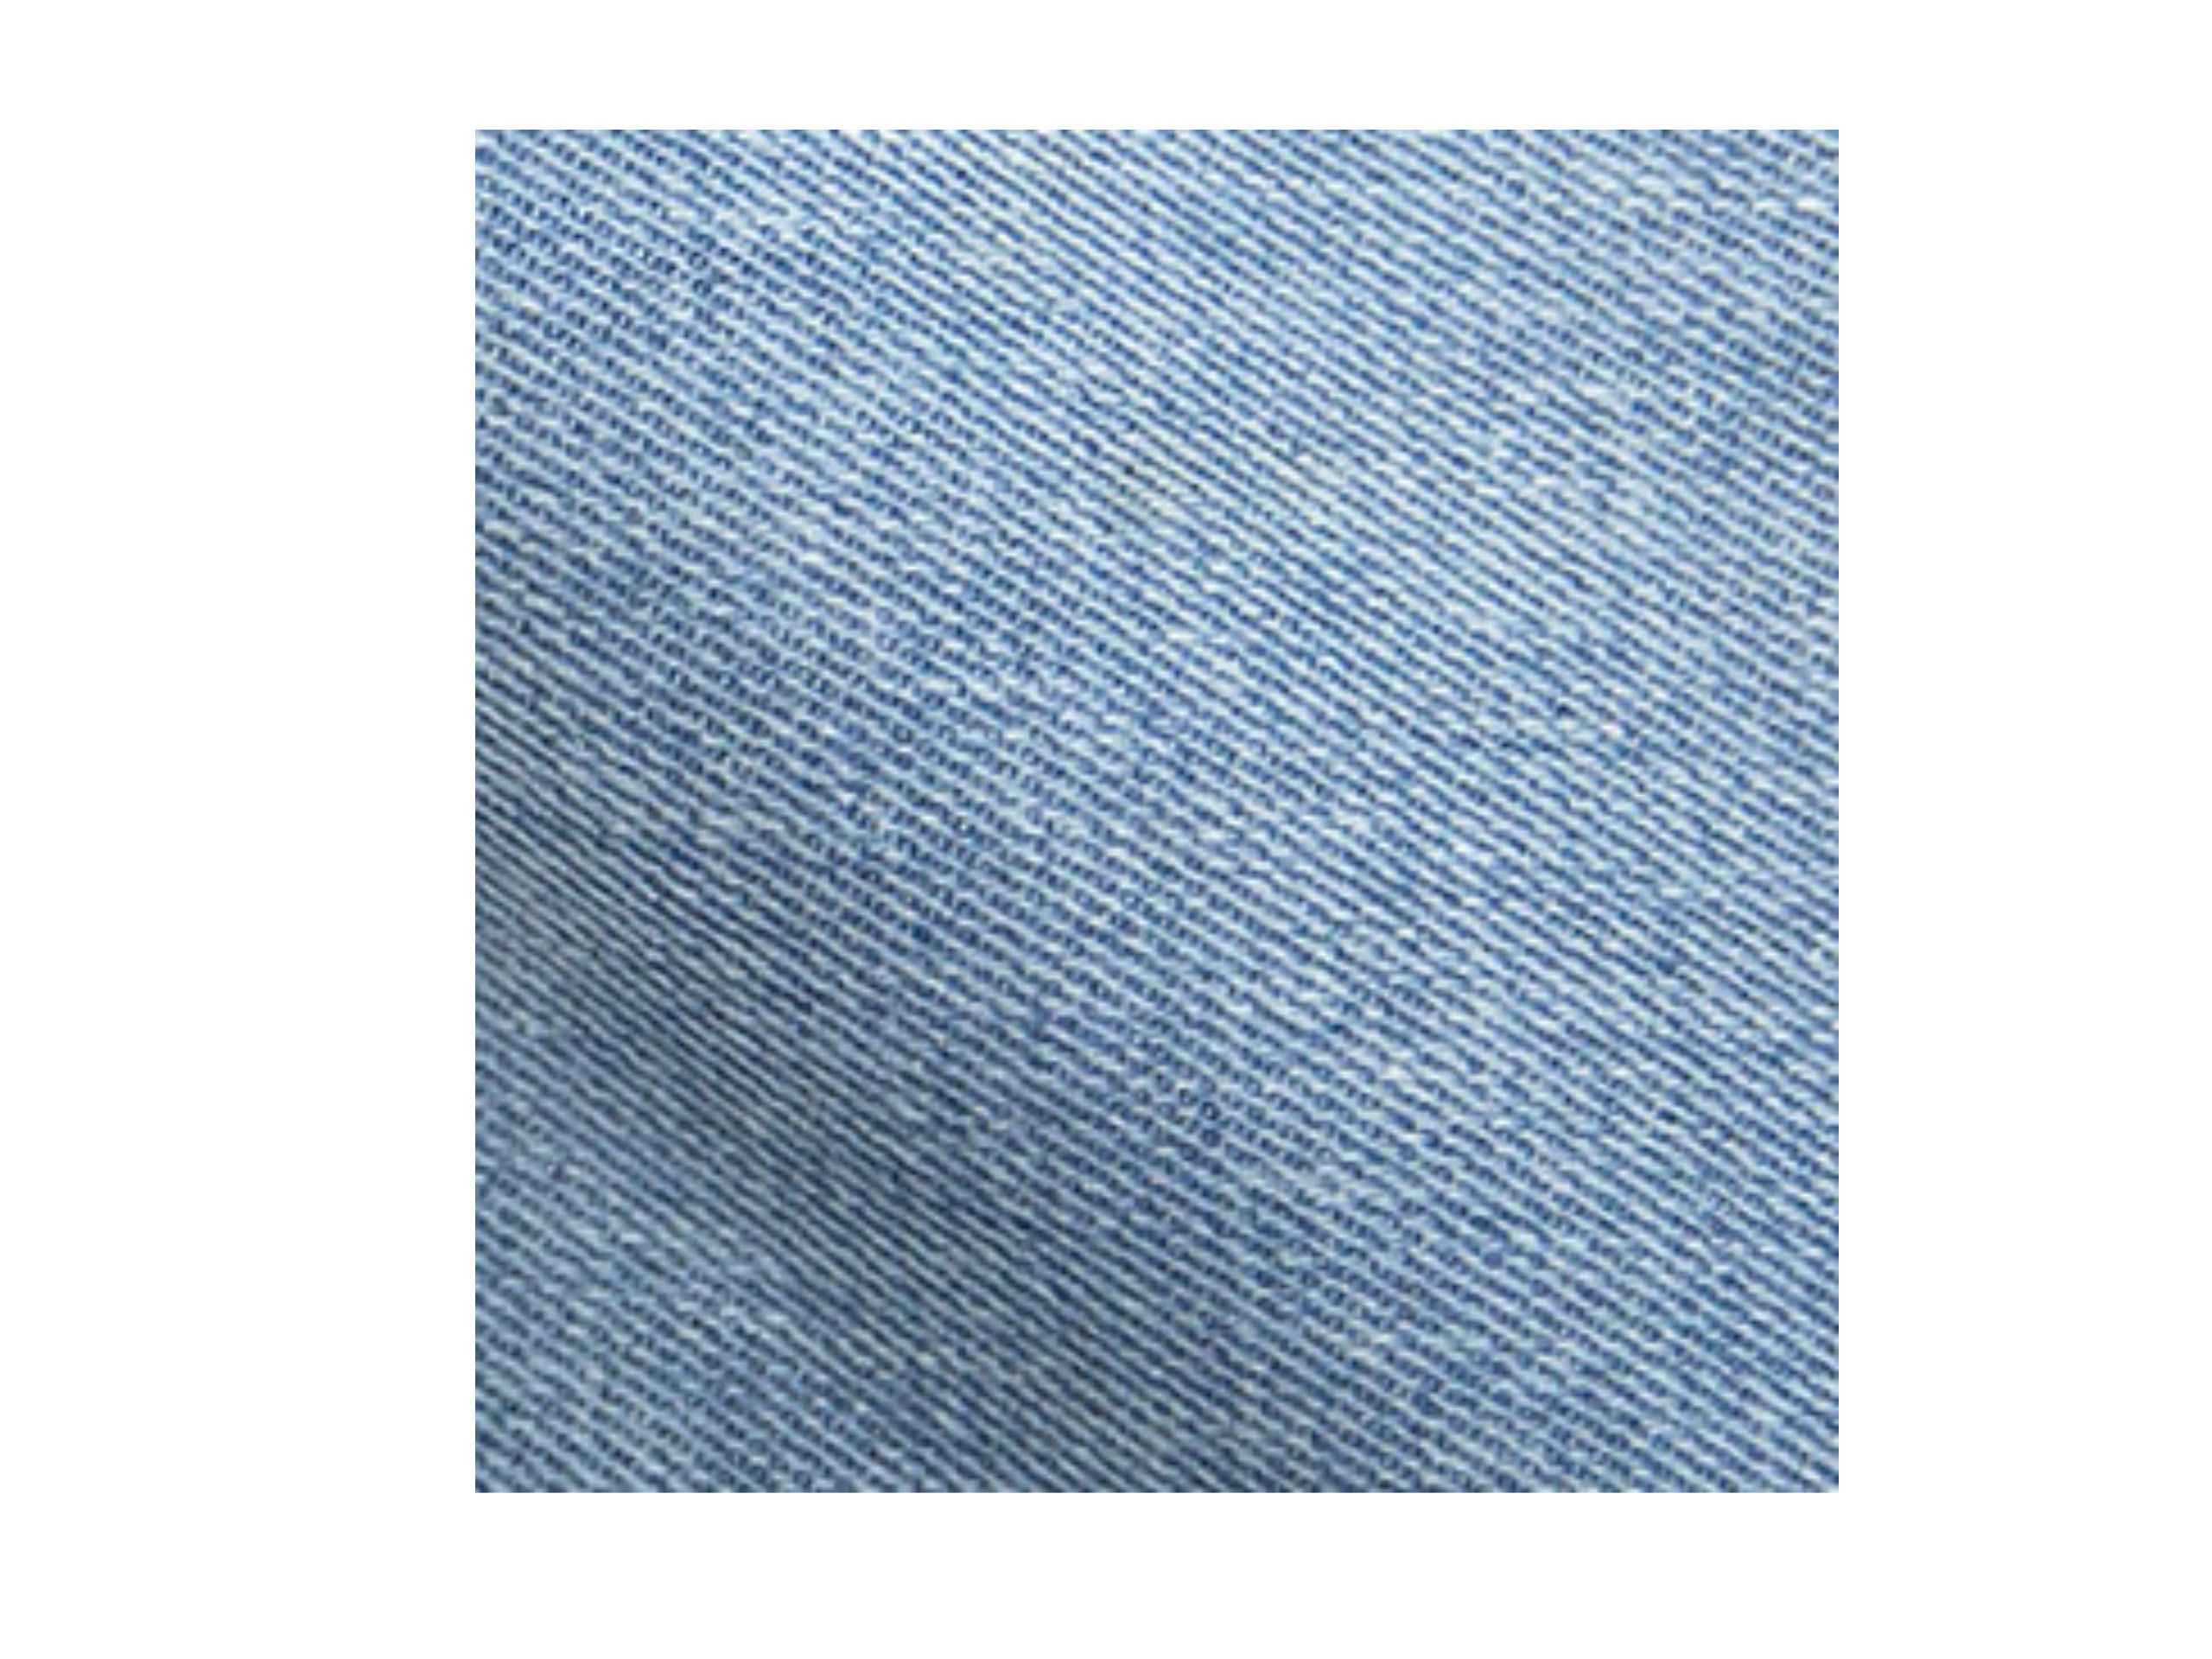 VENO Jeans-Flickstoff Hellblau 12,5 x 17 cm aufbügelbar